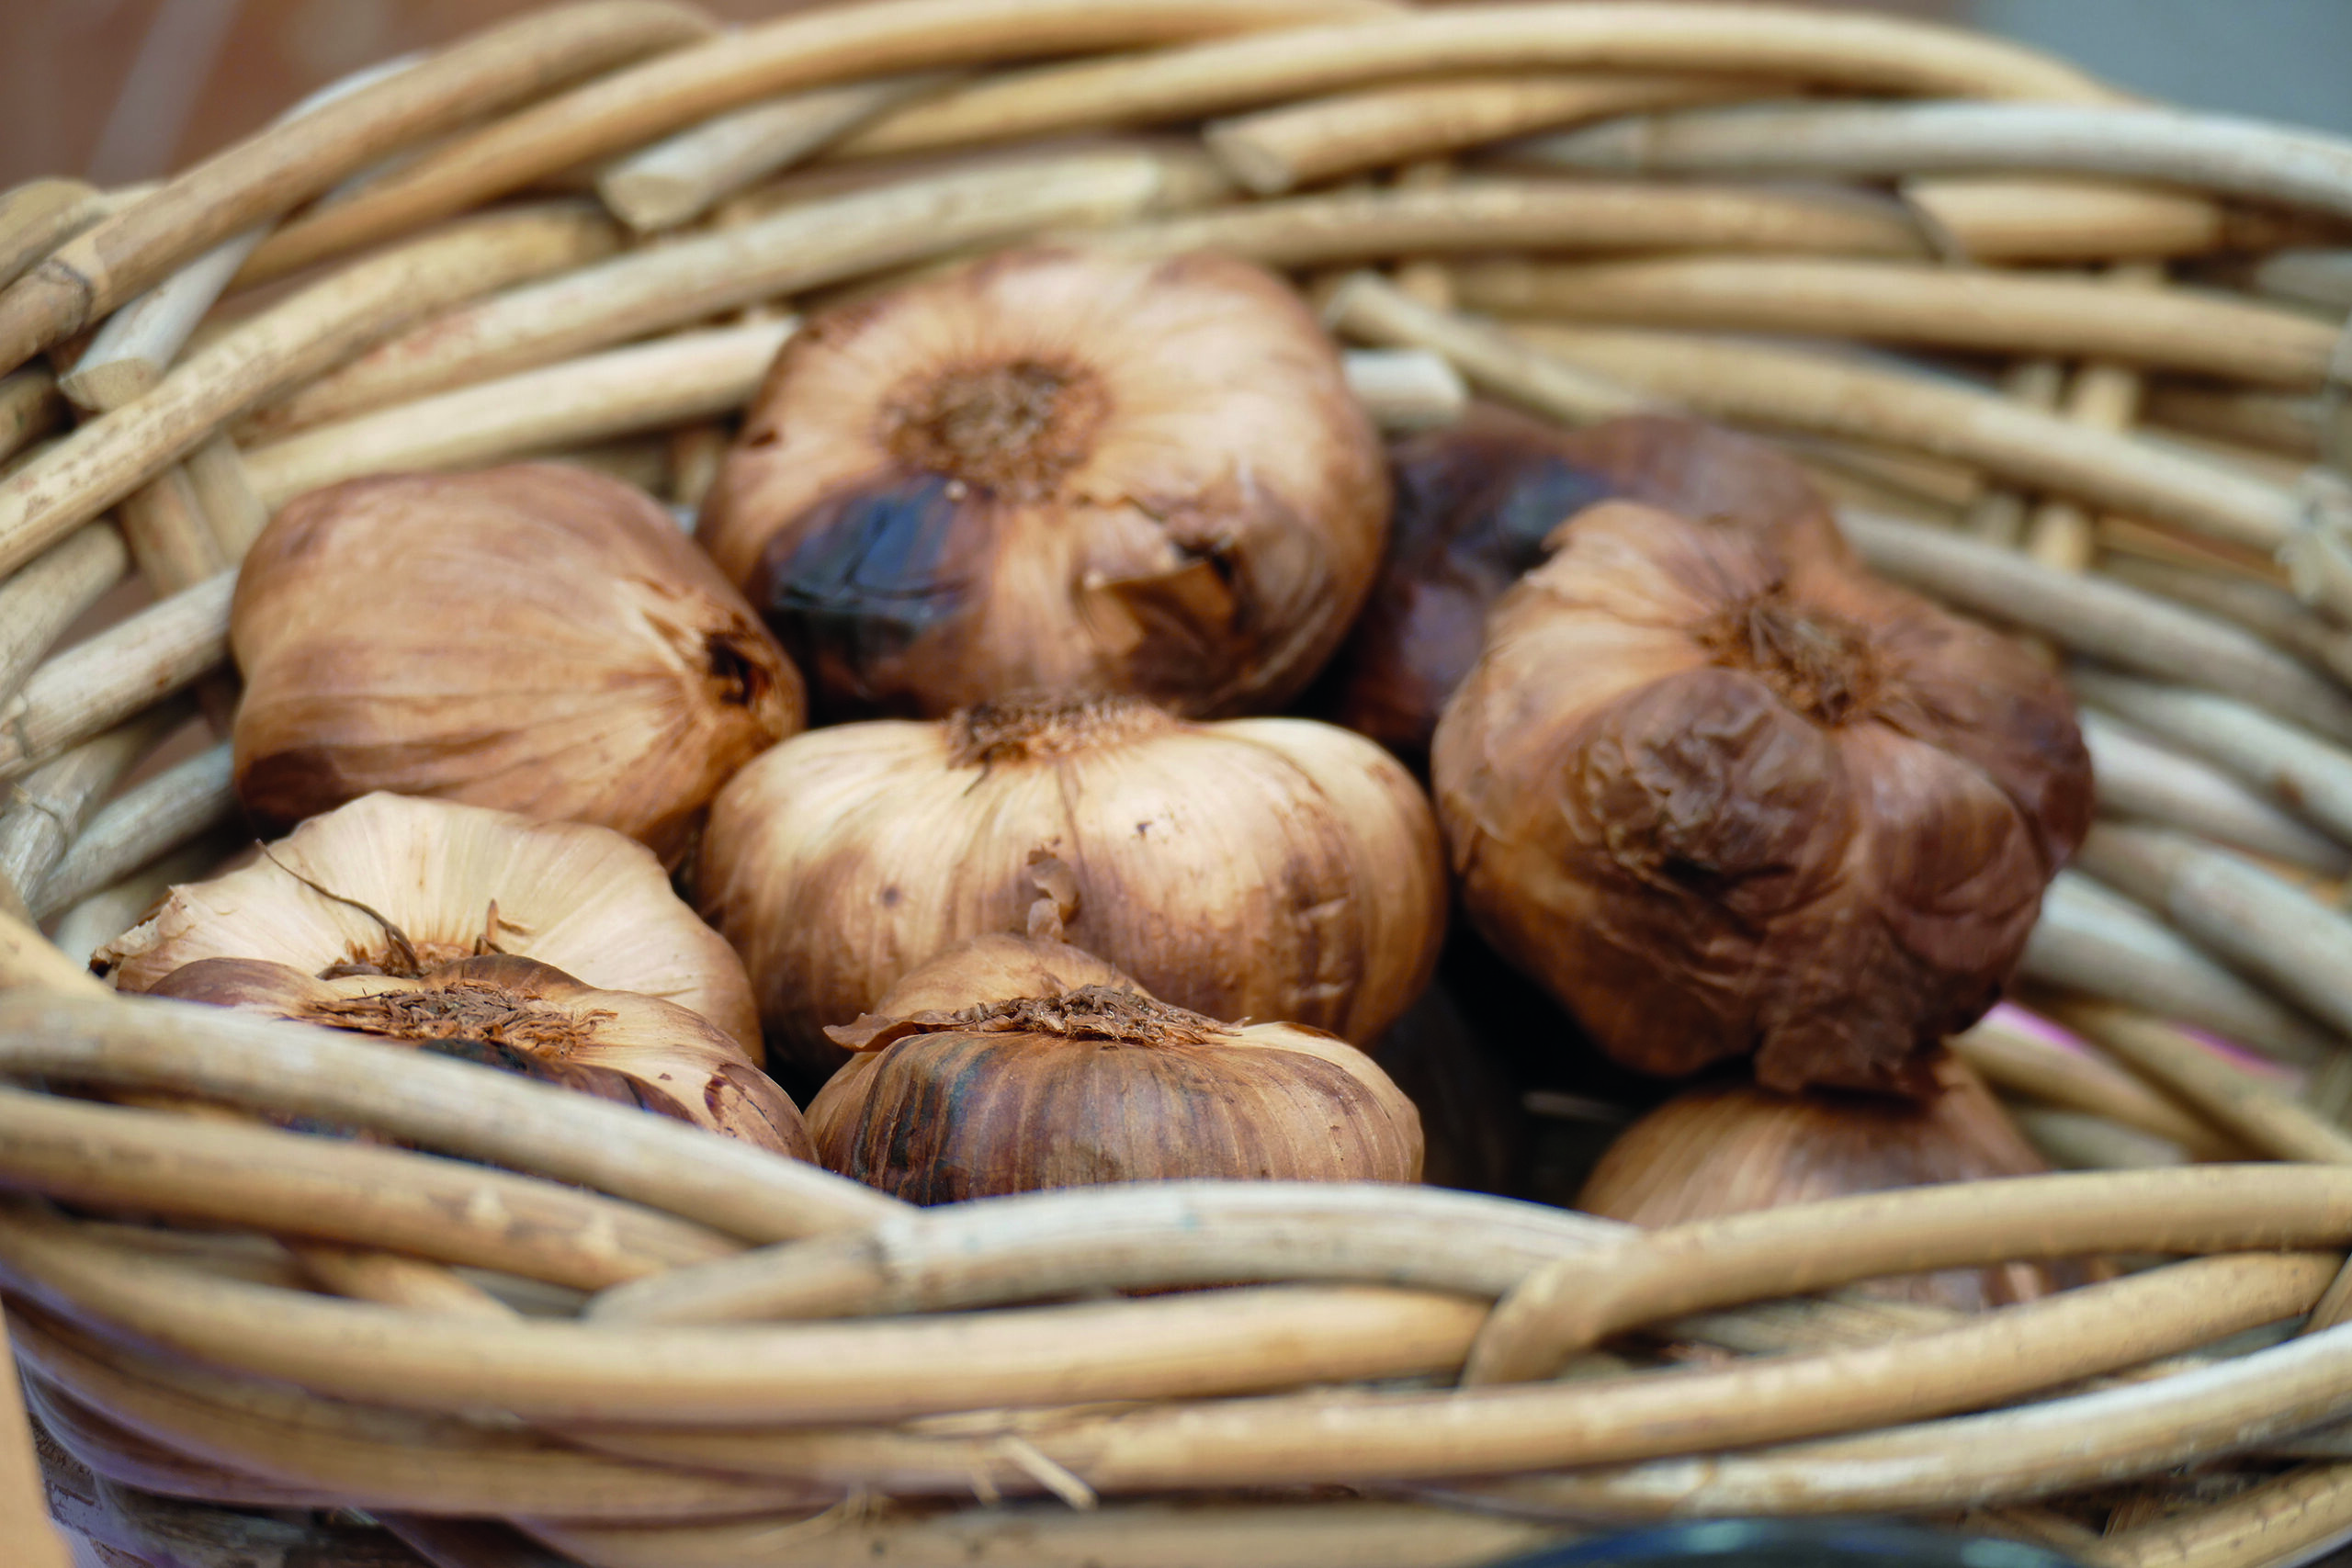 A bundle of black garlic in a basket